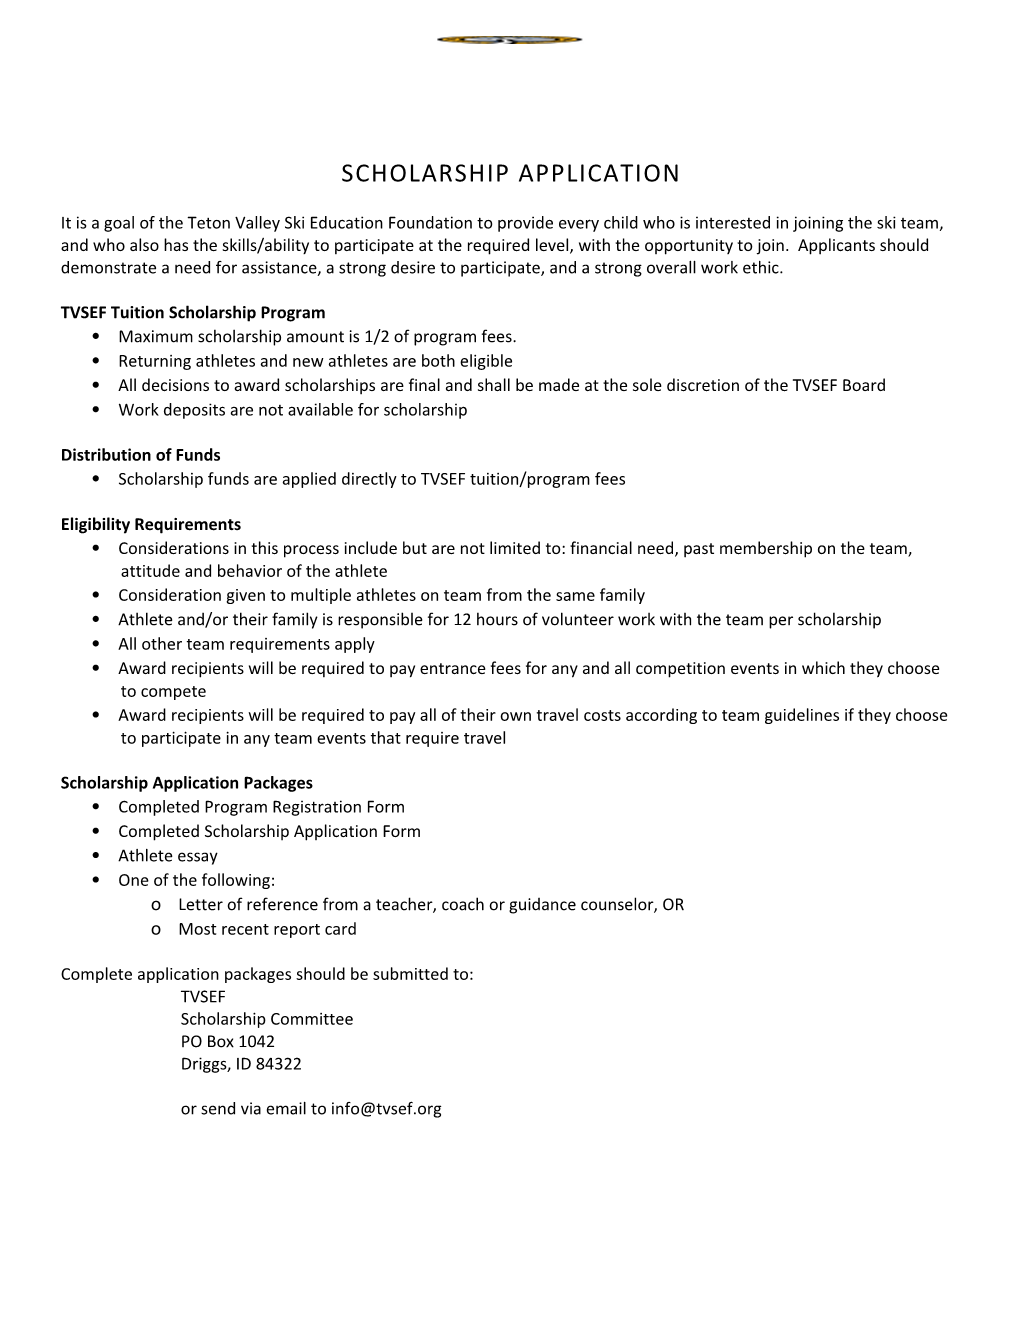 TVSEF Tuition Scholarship Program